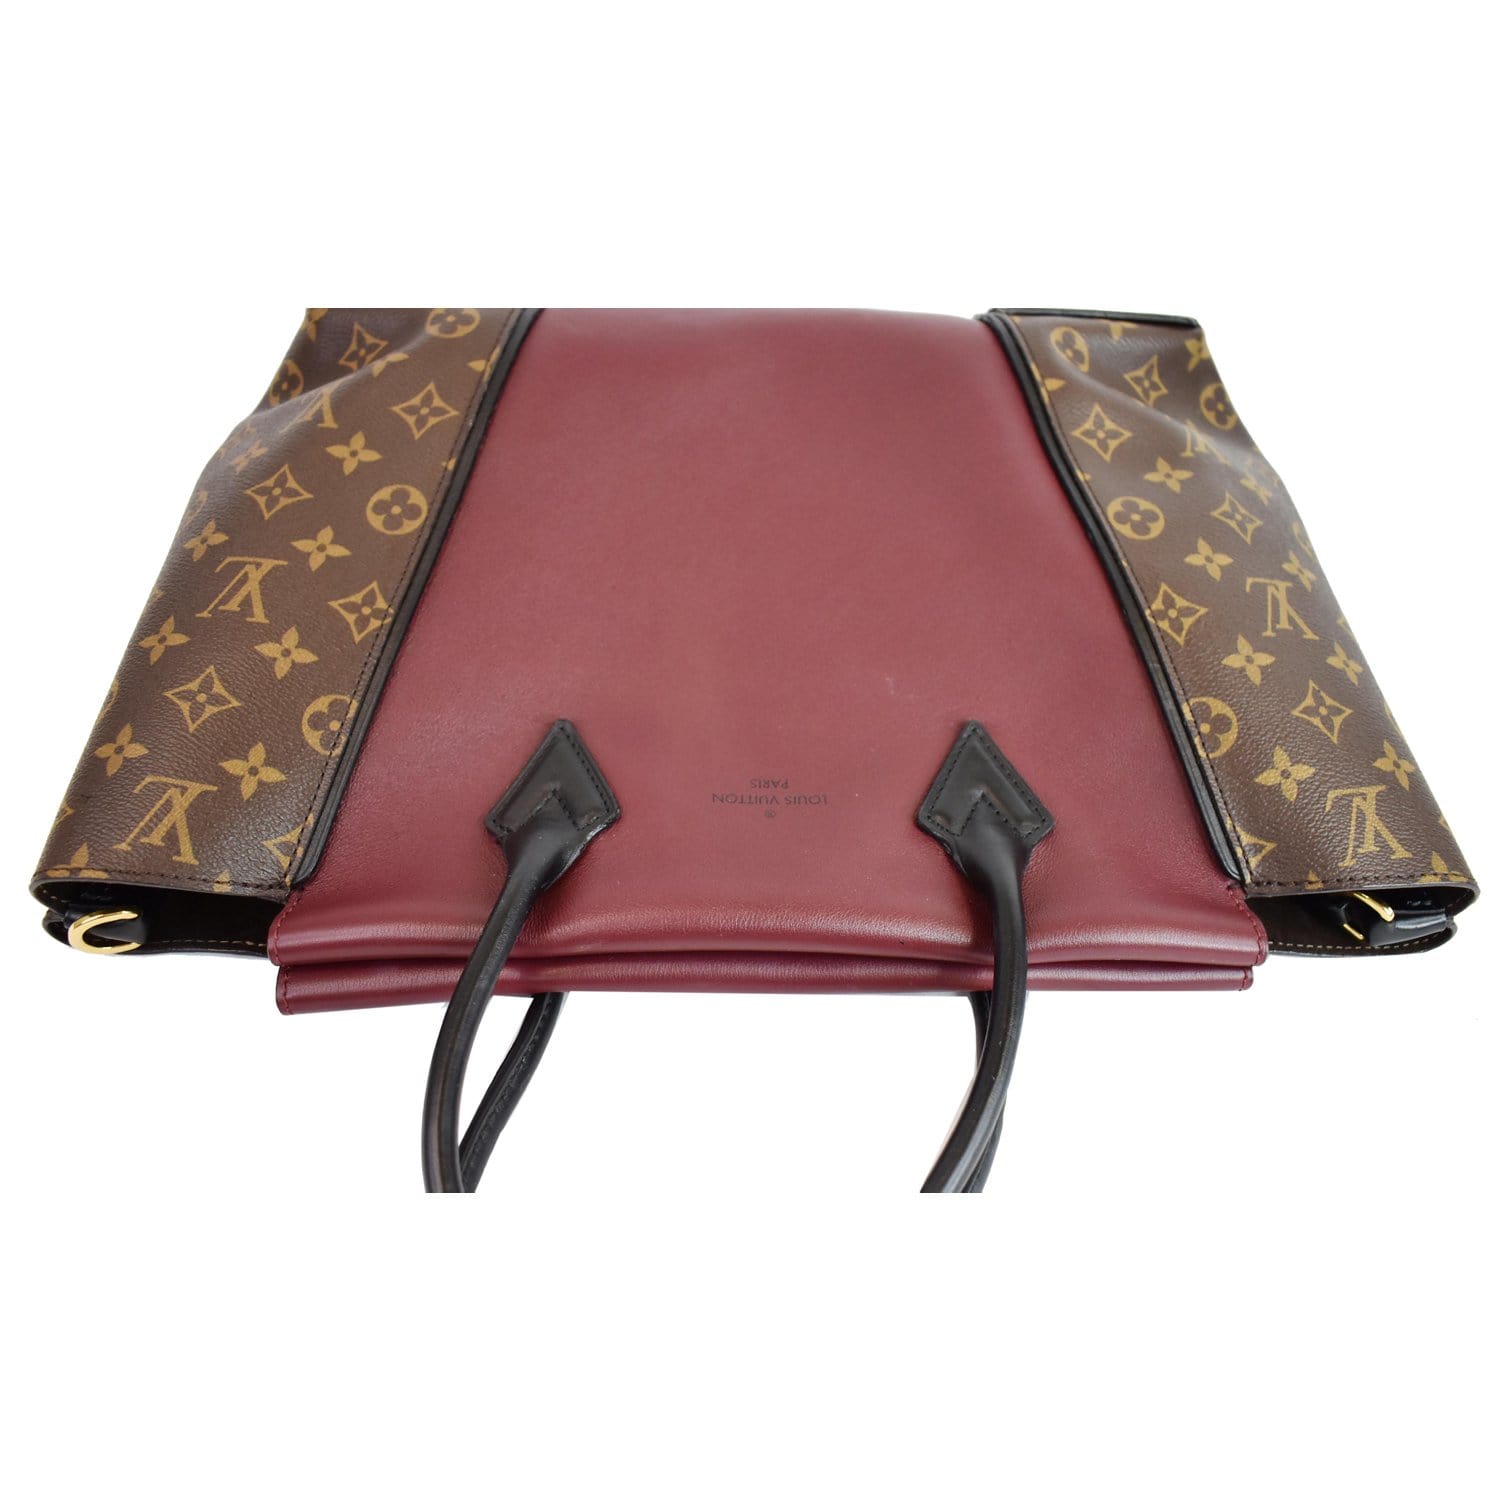 LOUIS VUITTON France Auth W Monogram PM Cherry Leather Tote Handbag TR4184  $4400